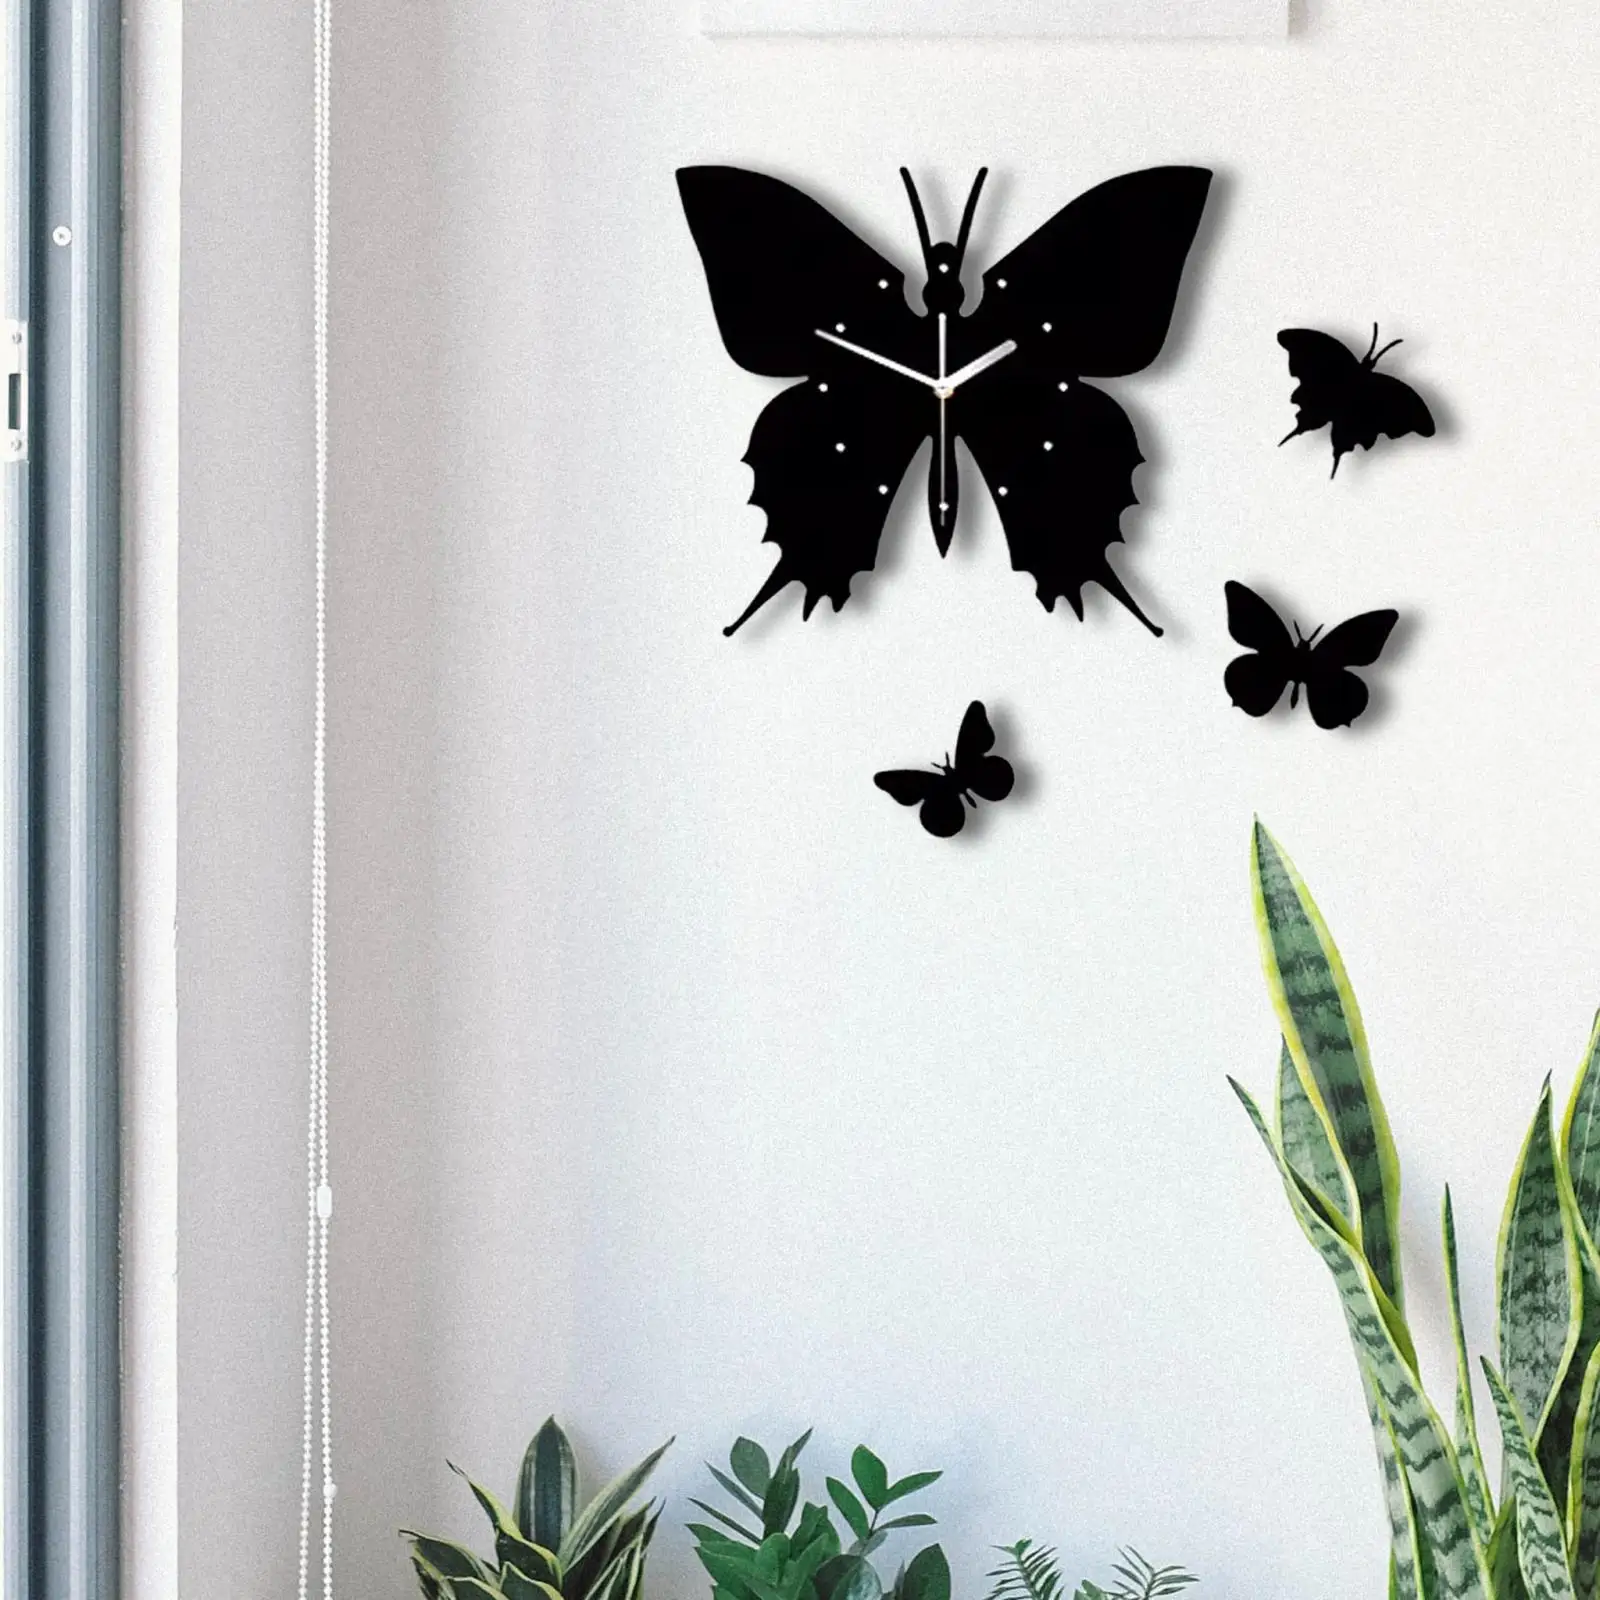 12inch Acrylic Black Butterfly DIY Wall Clock Kit Wall Art for Hall Way